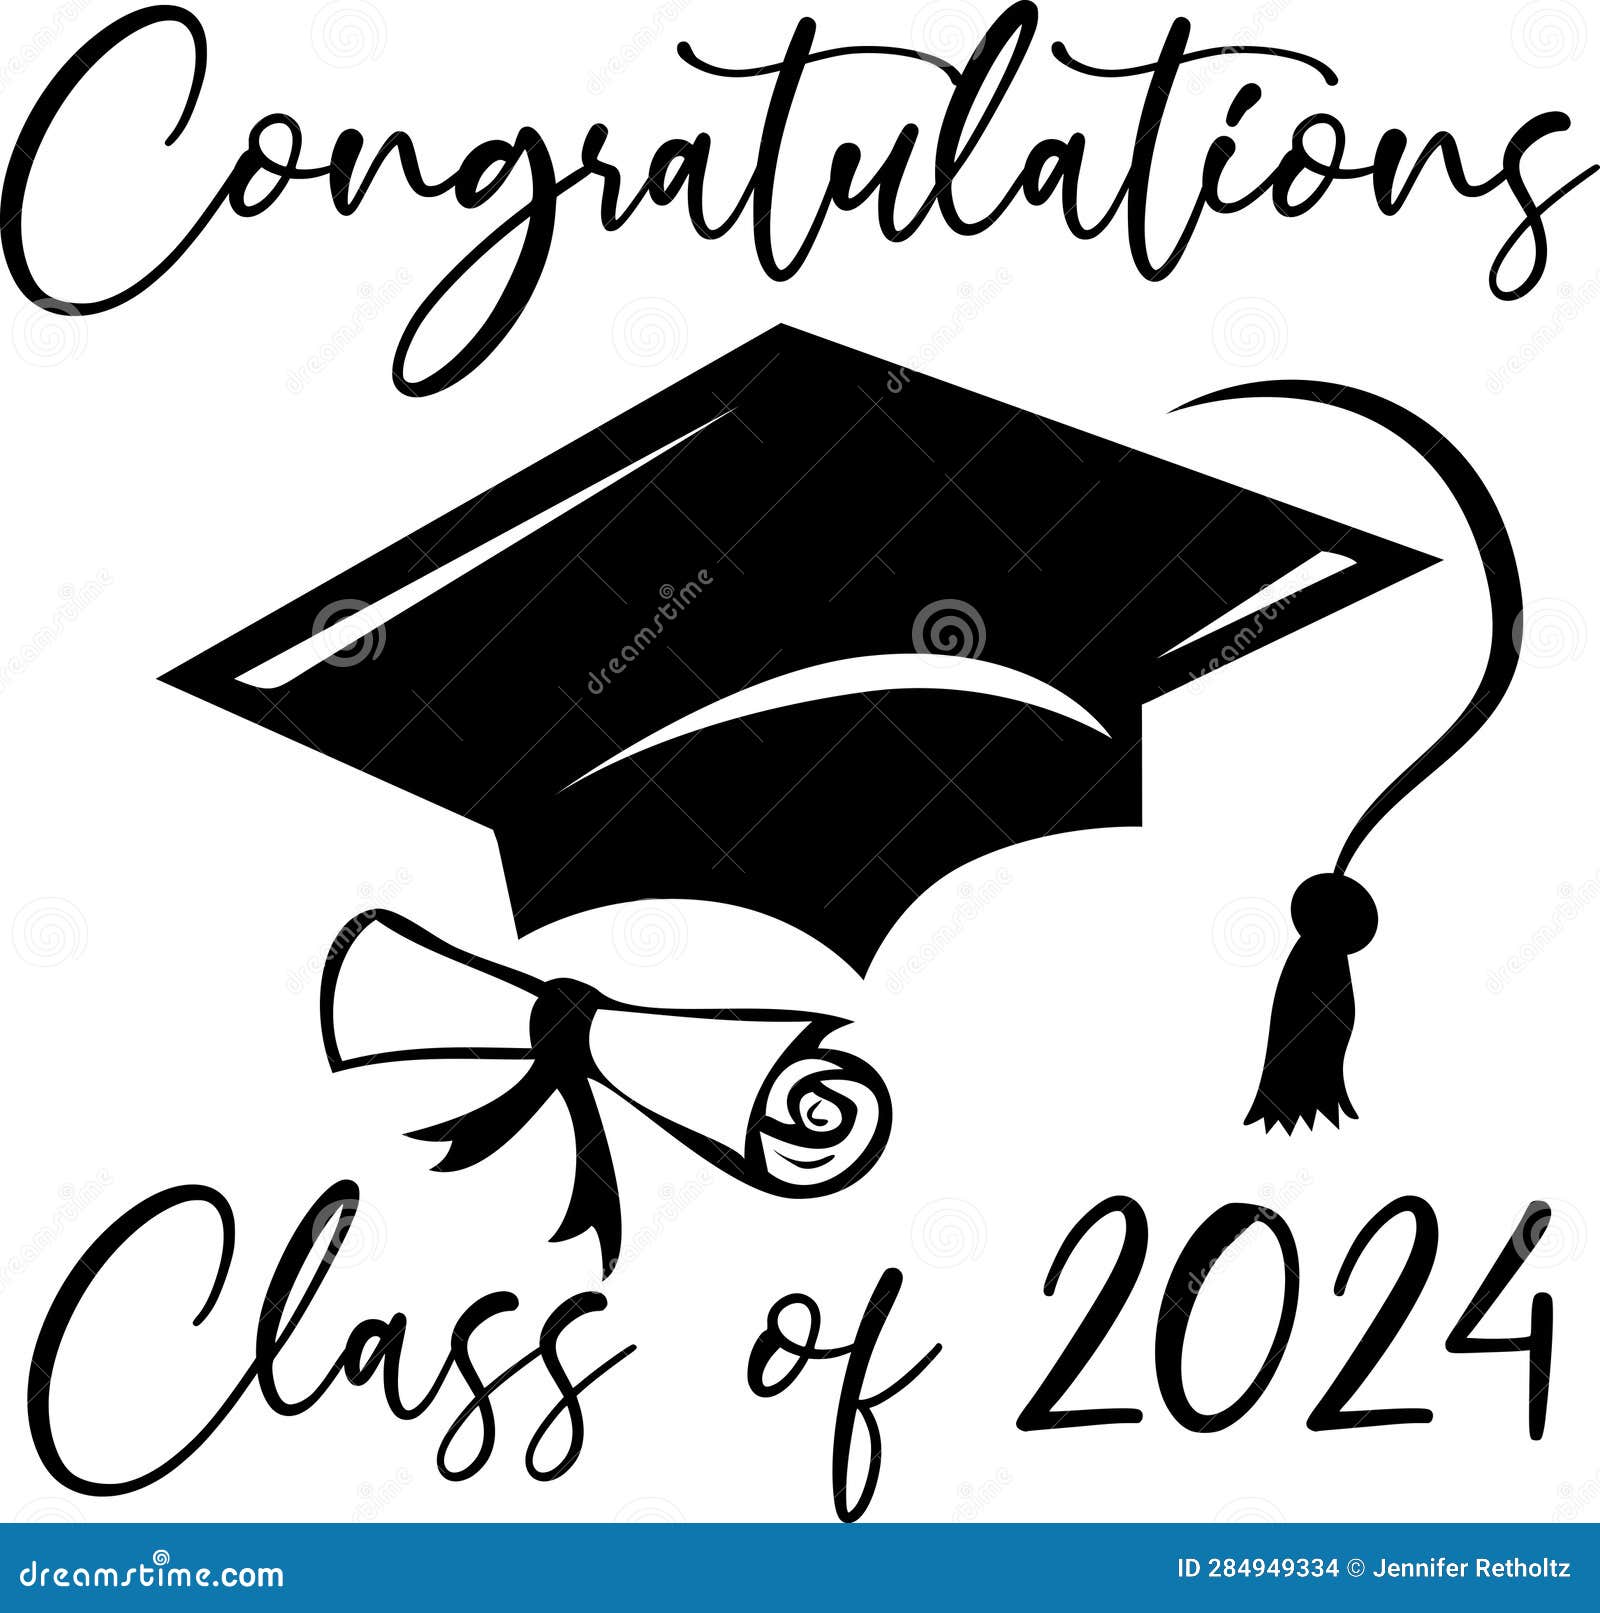 Congratulations Class of 2024 Graduation Cap and Diploma Design Stock  Illustration - Illustration of design, college: 284949334